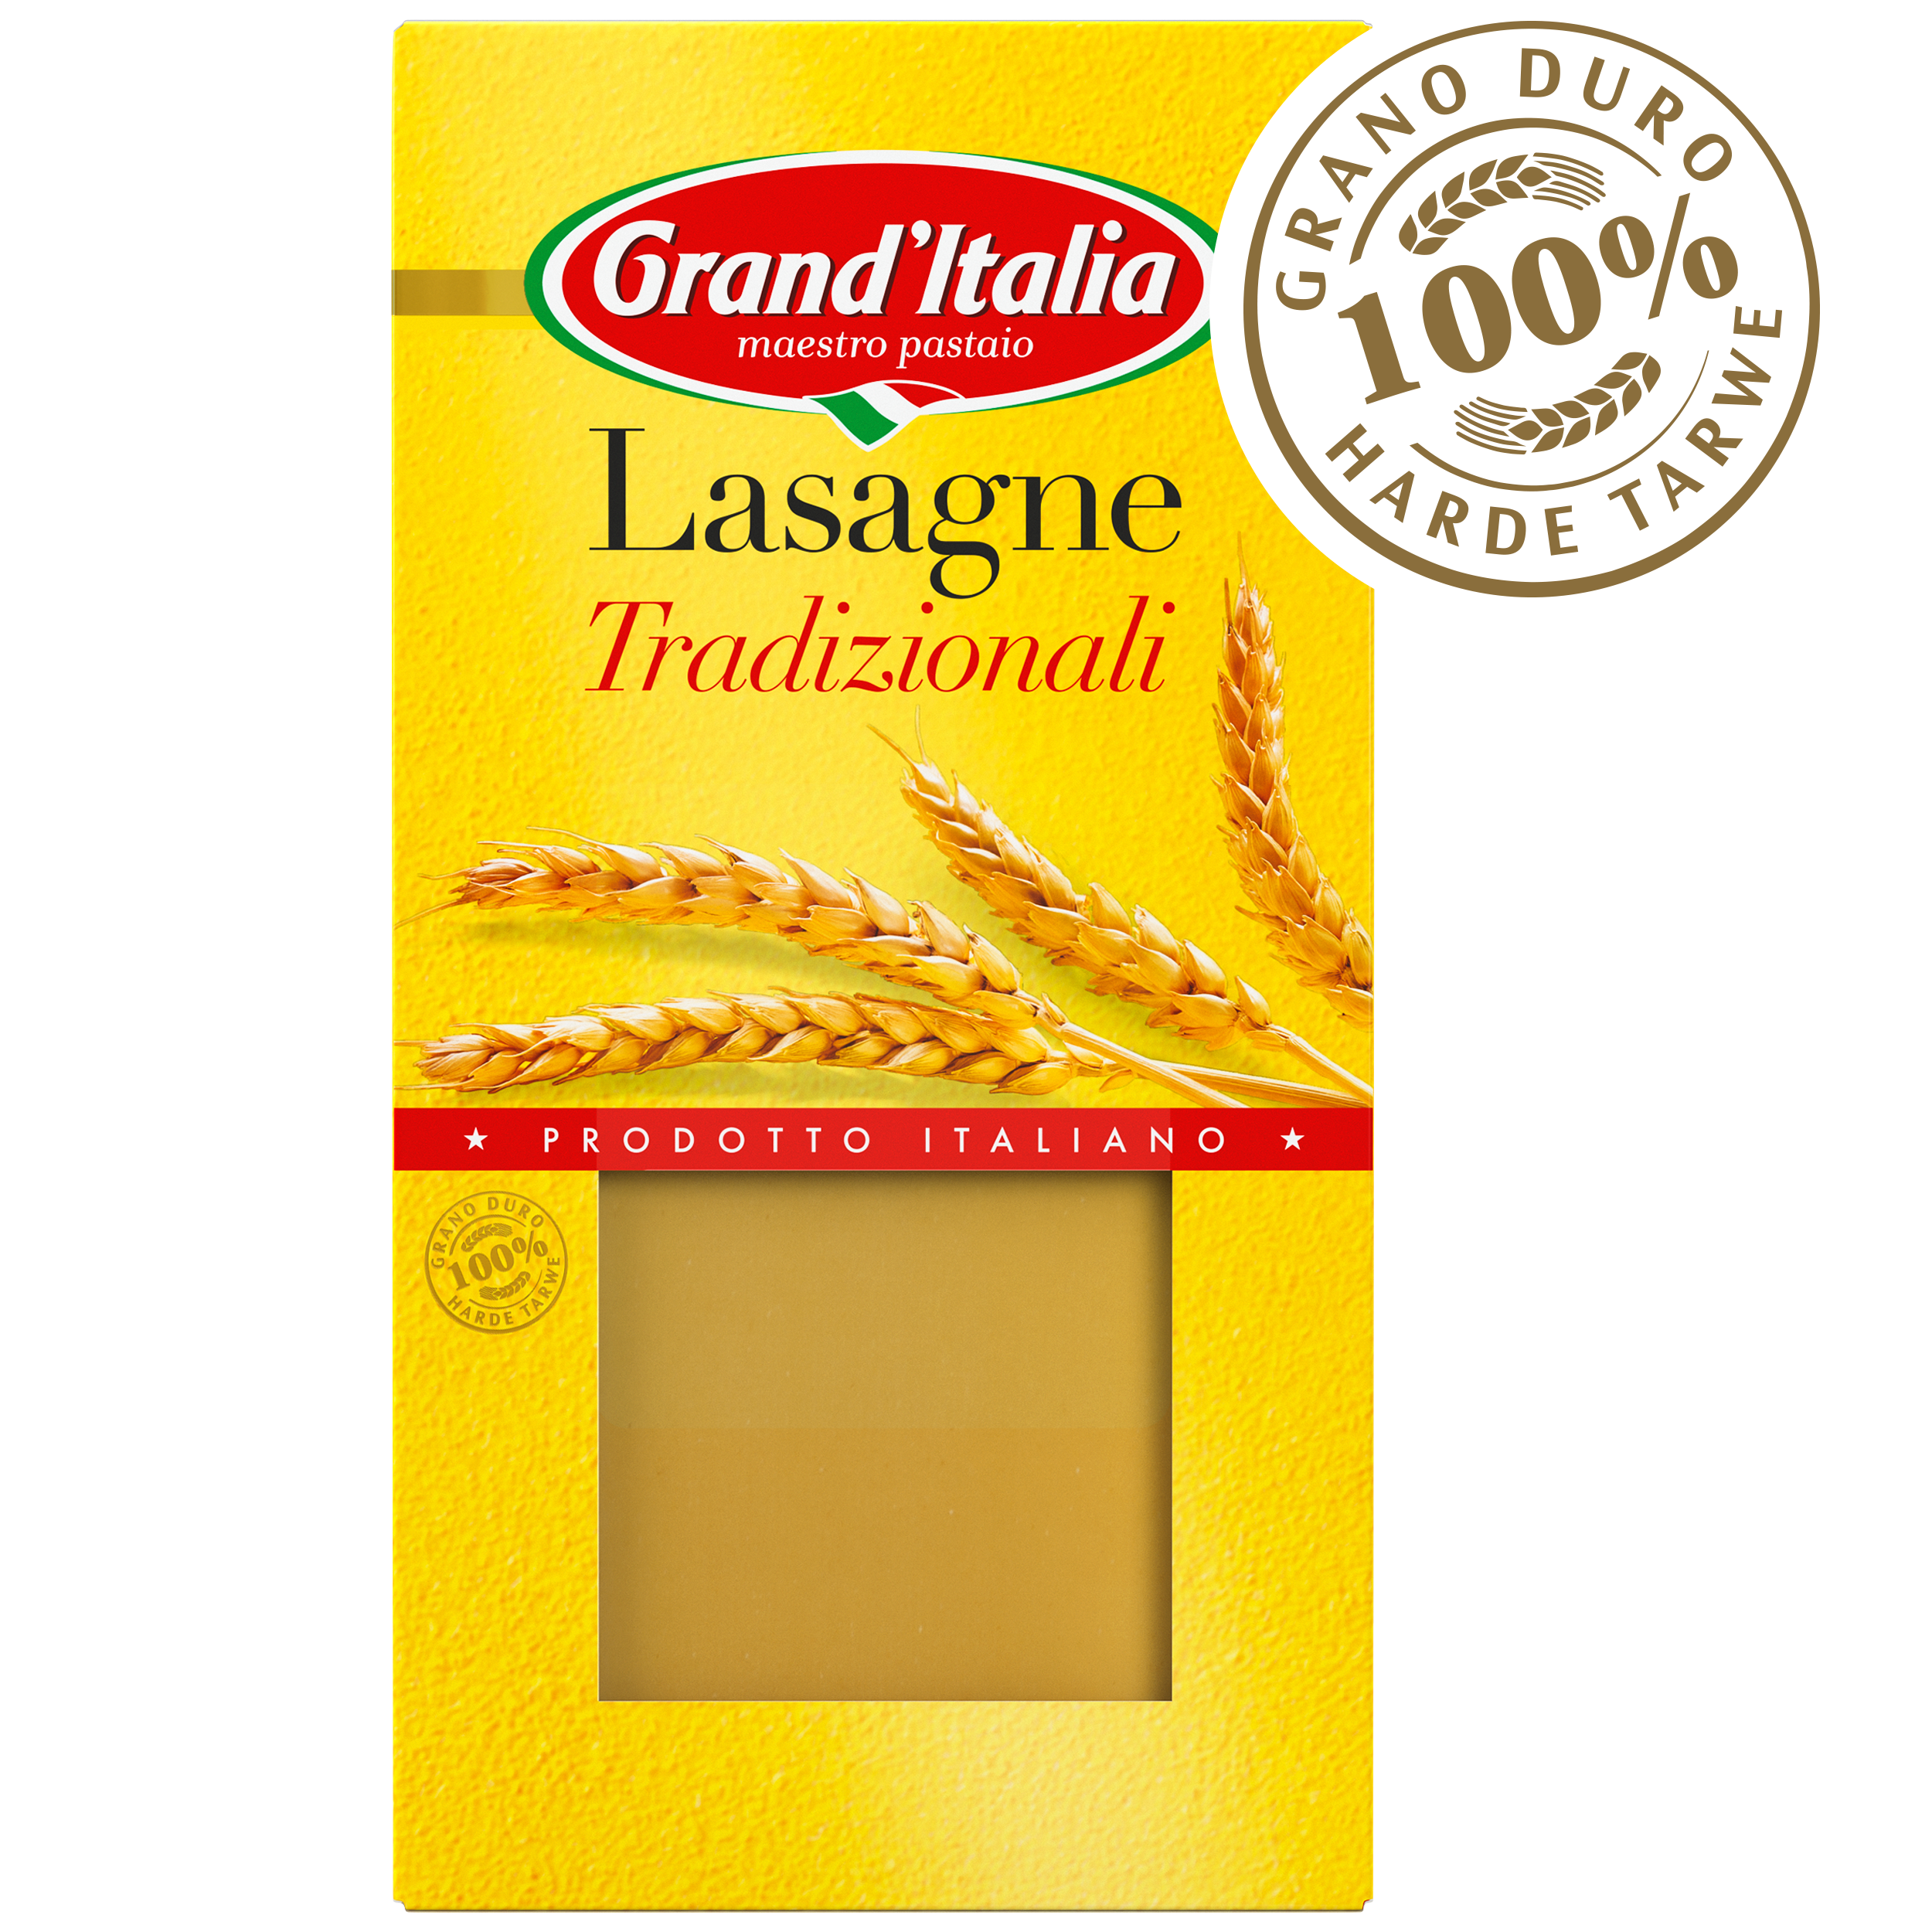 Pasta Lasagne Tradizionali 250g claim Grand'Italia